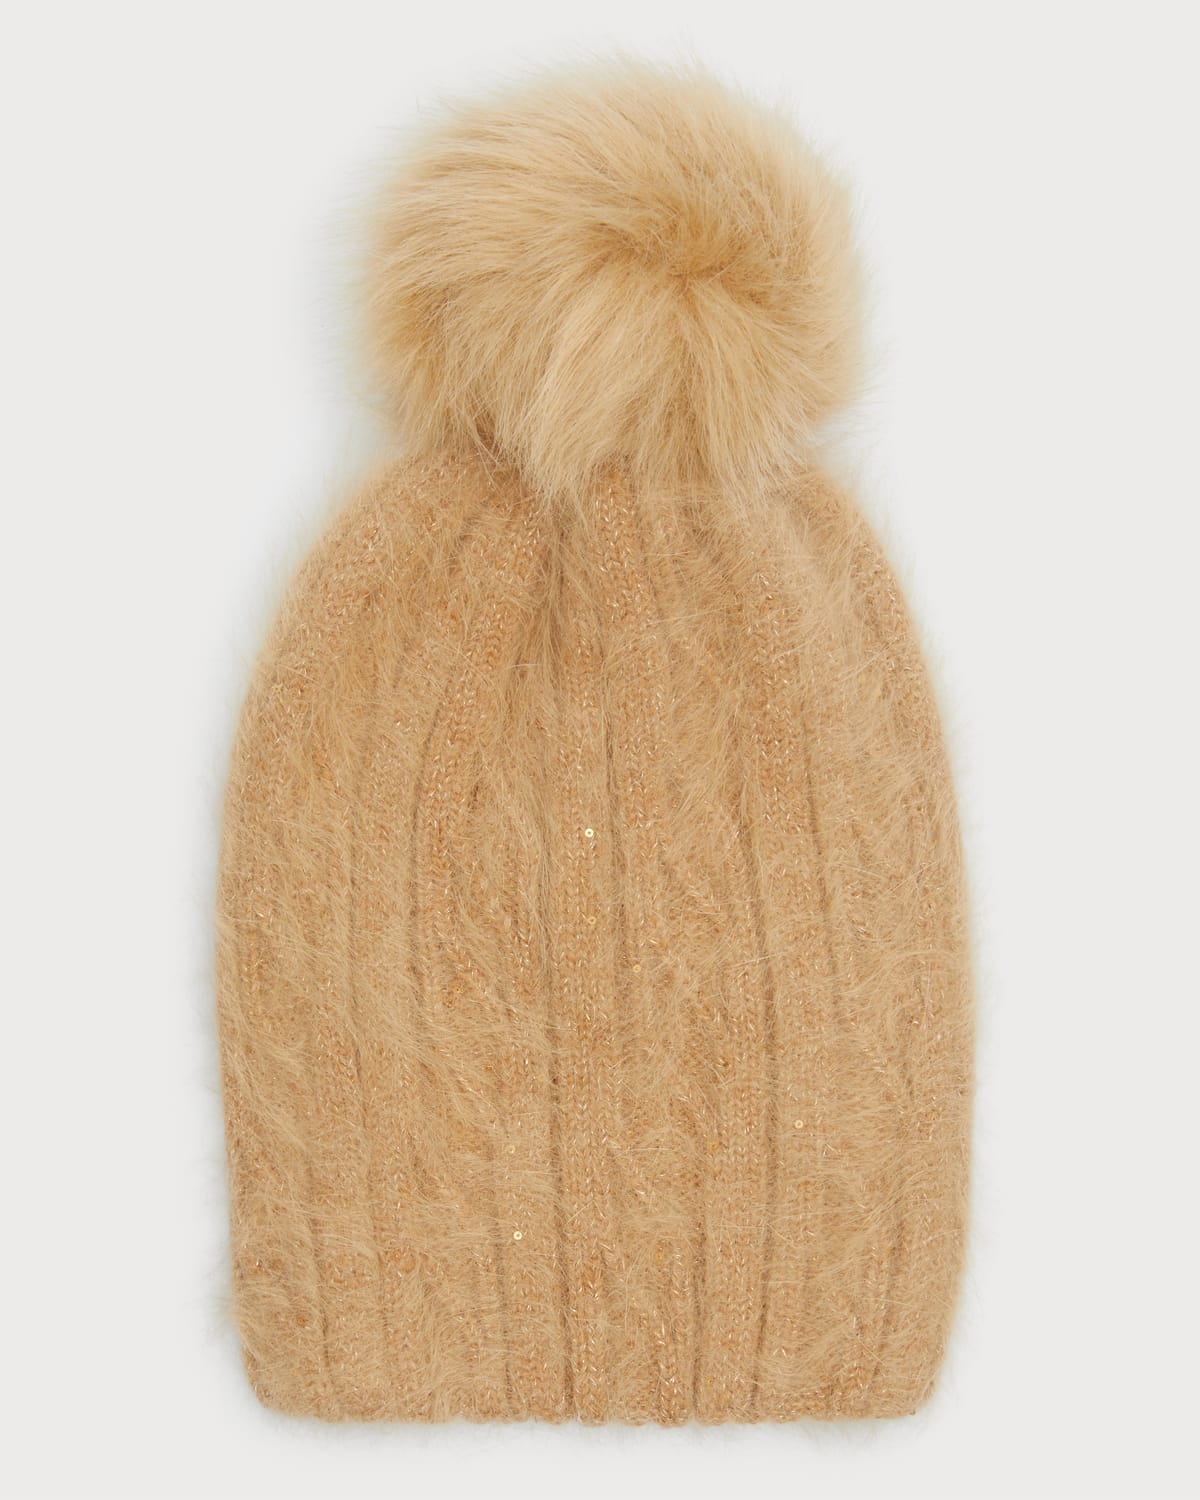 Adrienne Landau Knit Wool Beanie W/ Faux Fur Pom